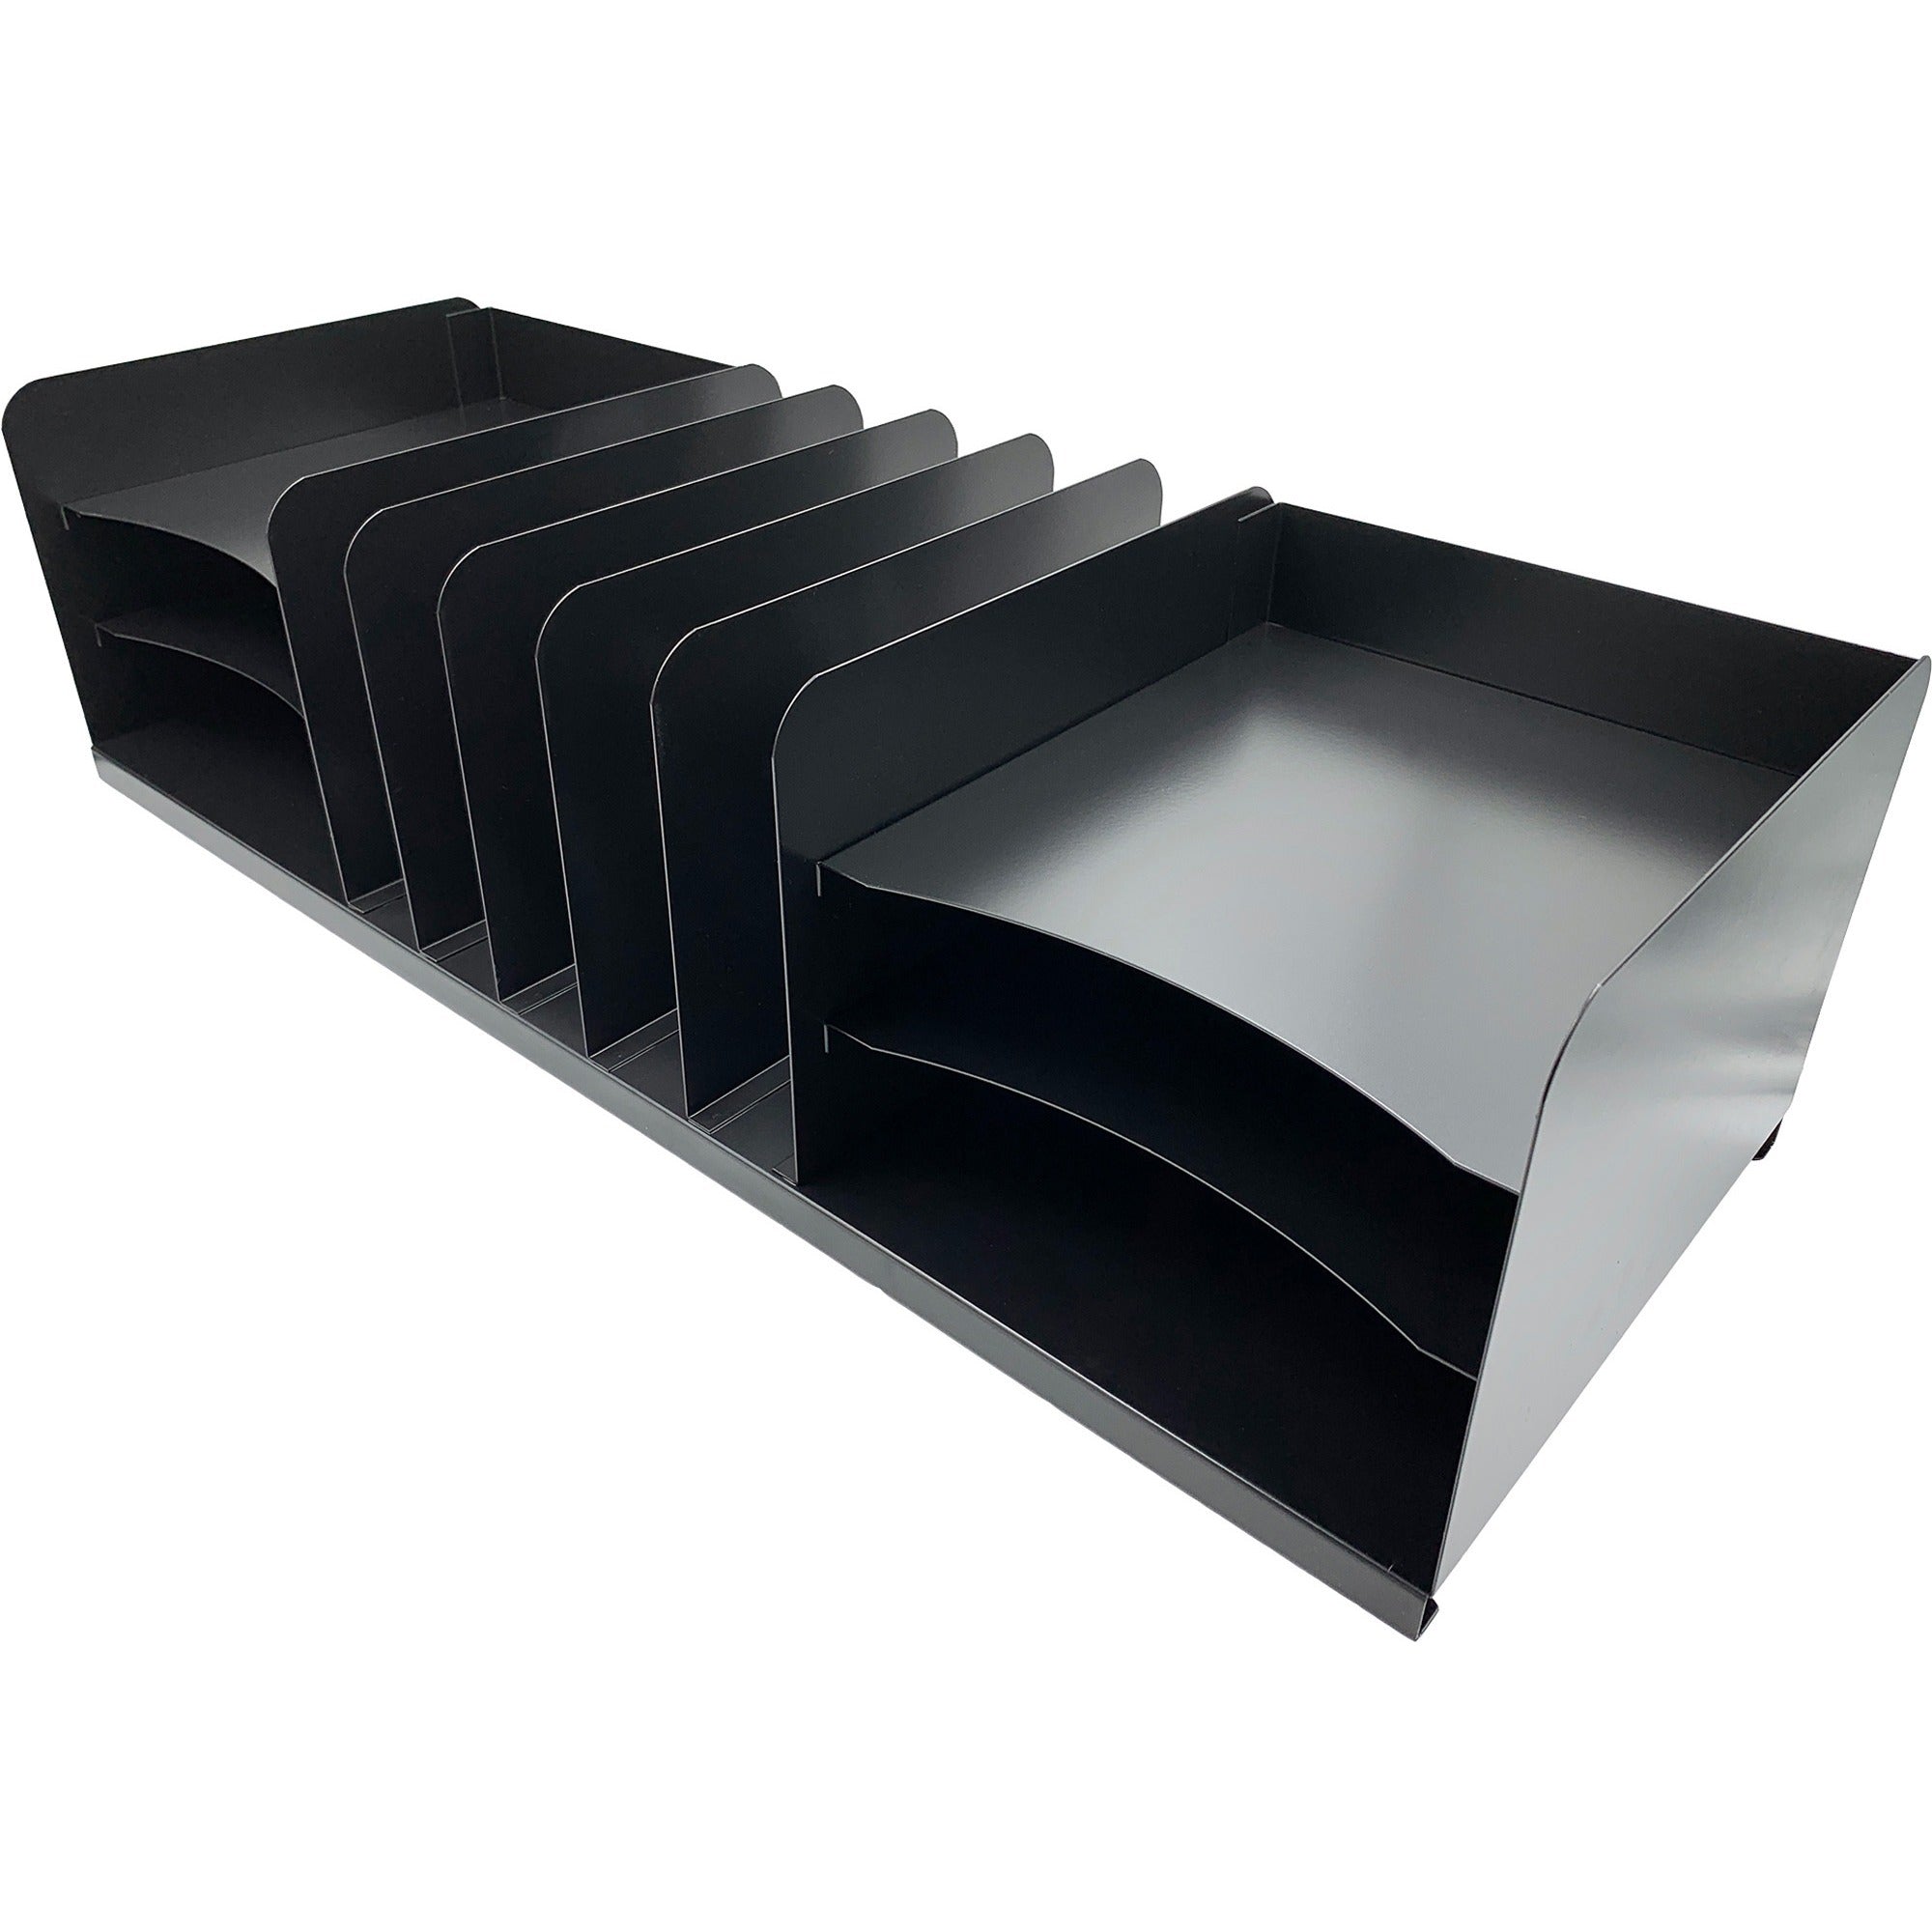 huron-vertical-horizontal-combo-desk-organizer-11-compartments-horizontal-vertical-8-height-x-30-width-x-11-depth-durable-black-steel-1-each_hurhasz0170 - 1